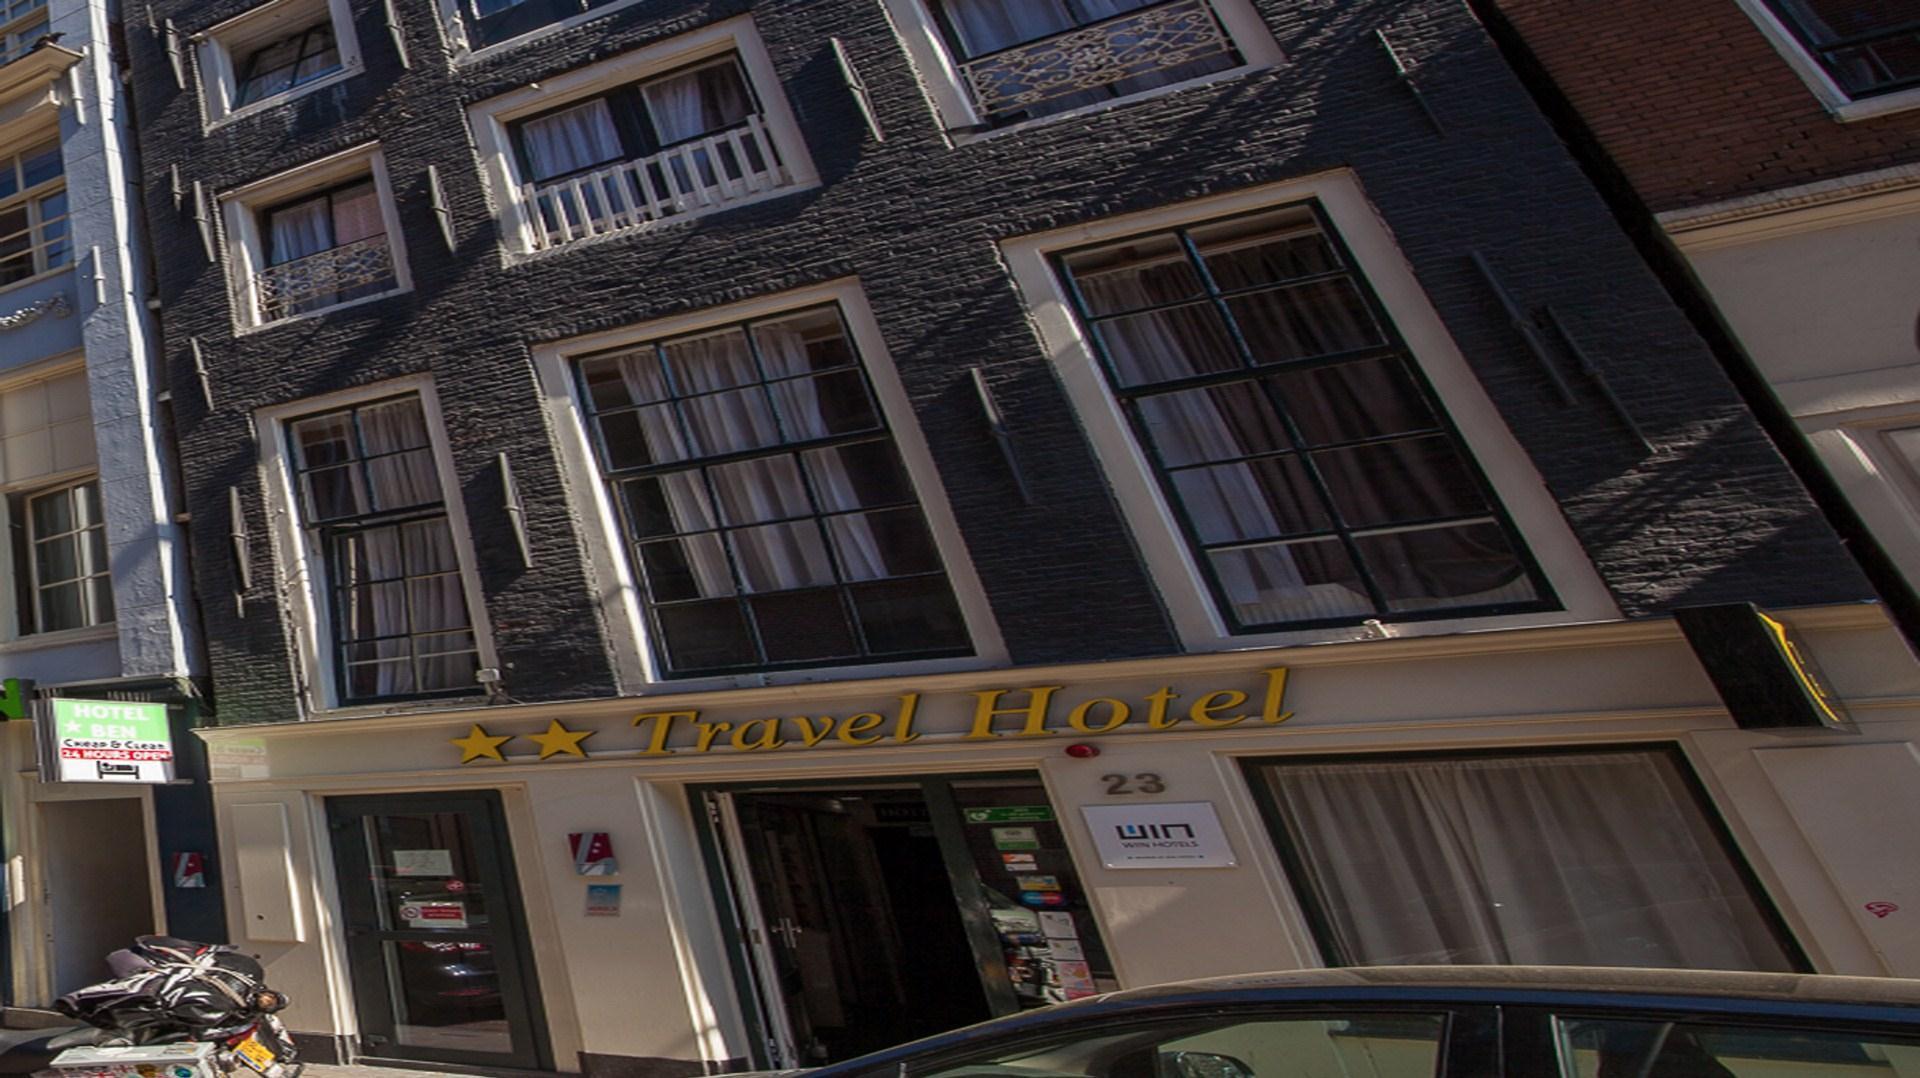 Hotel Travel Amsterdam in Amsterdam, NL